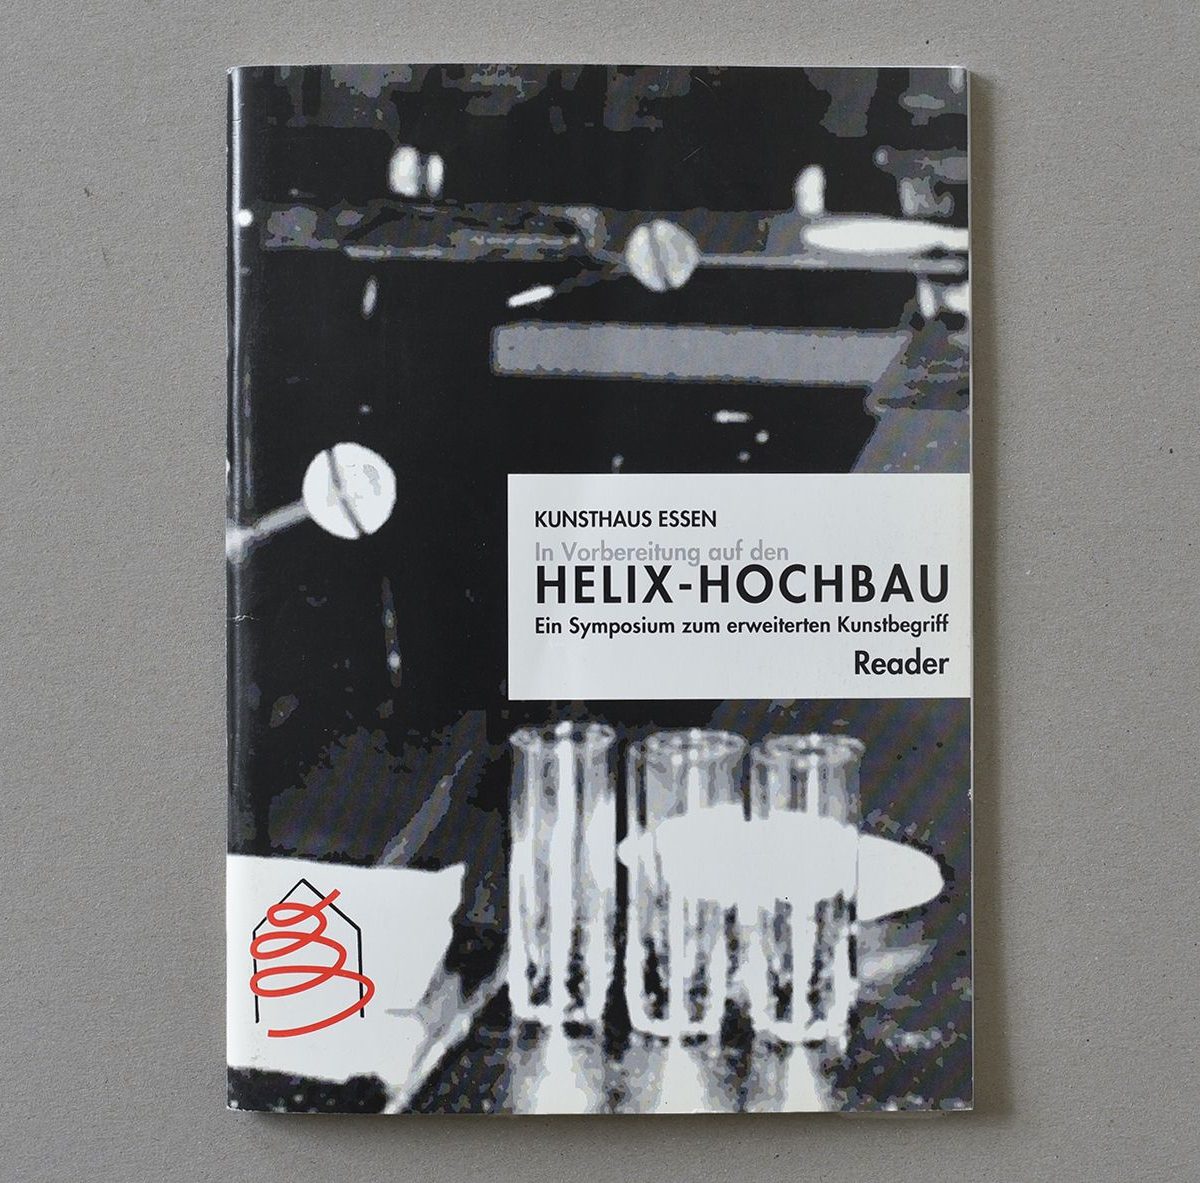 Katalog Der Helix-Hochbau